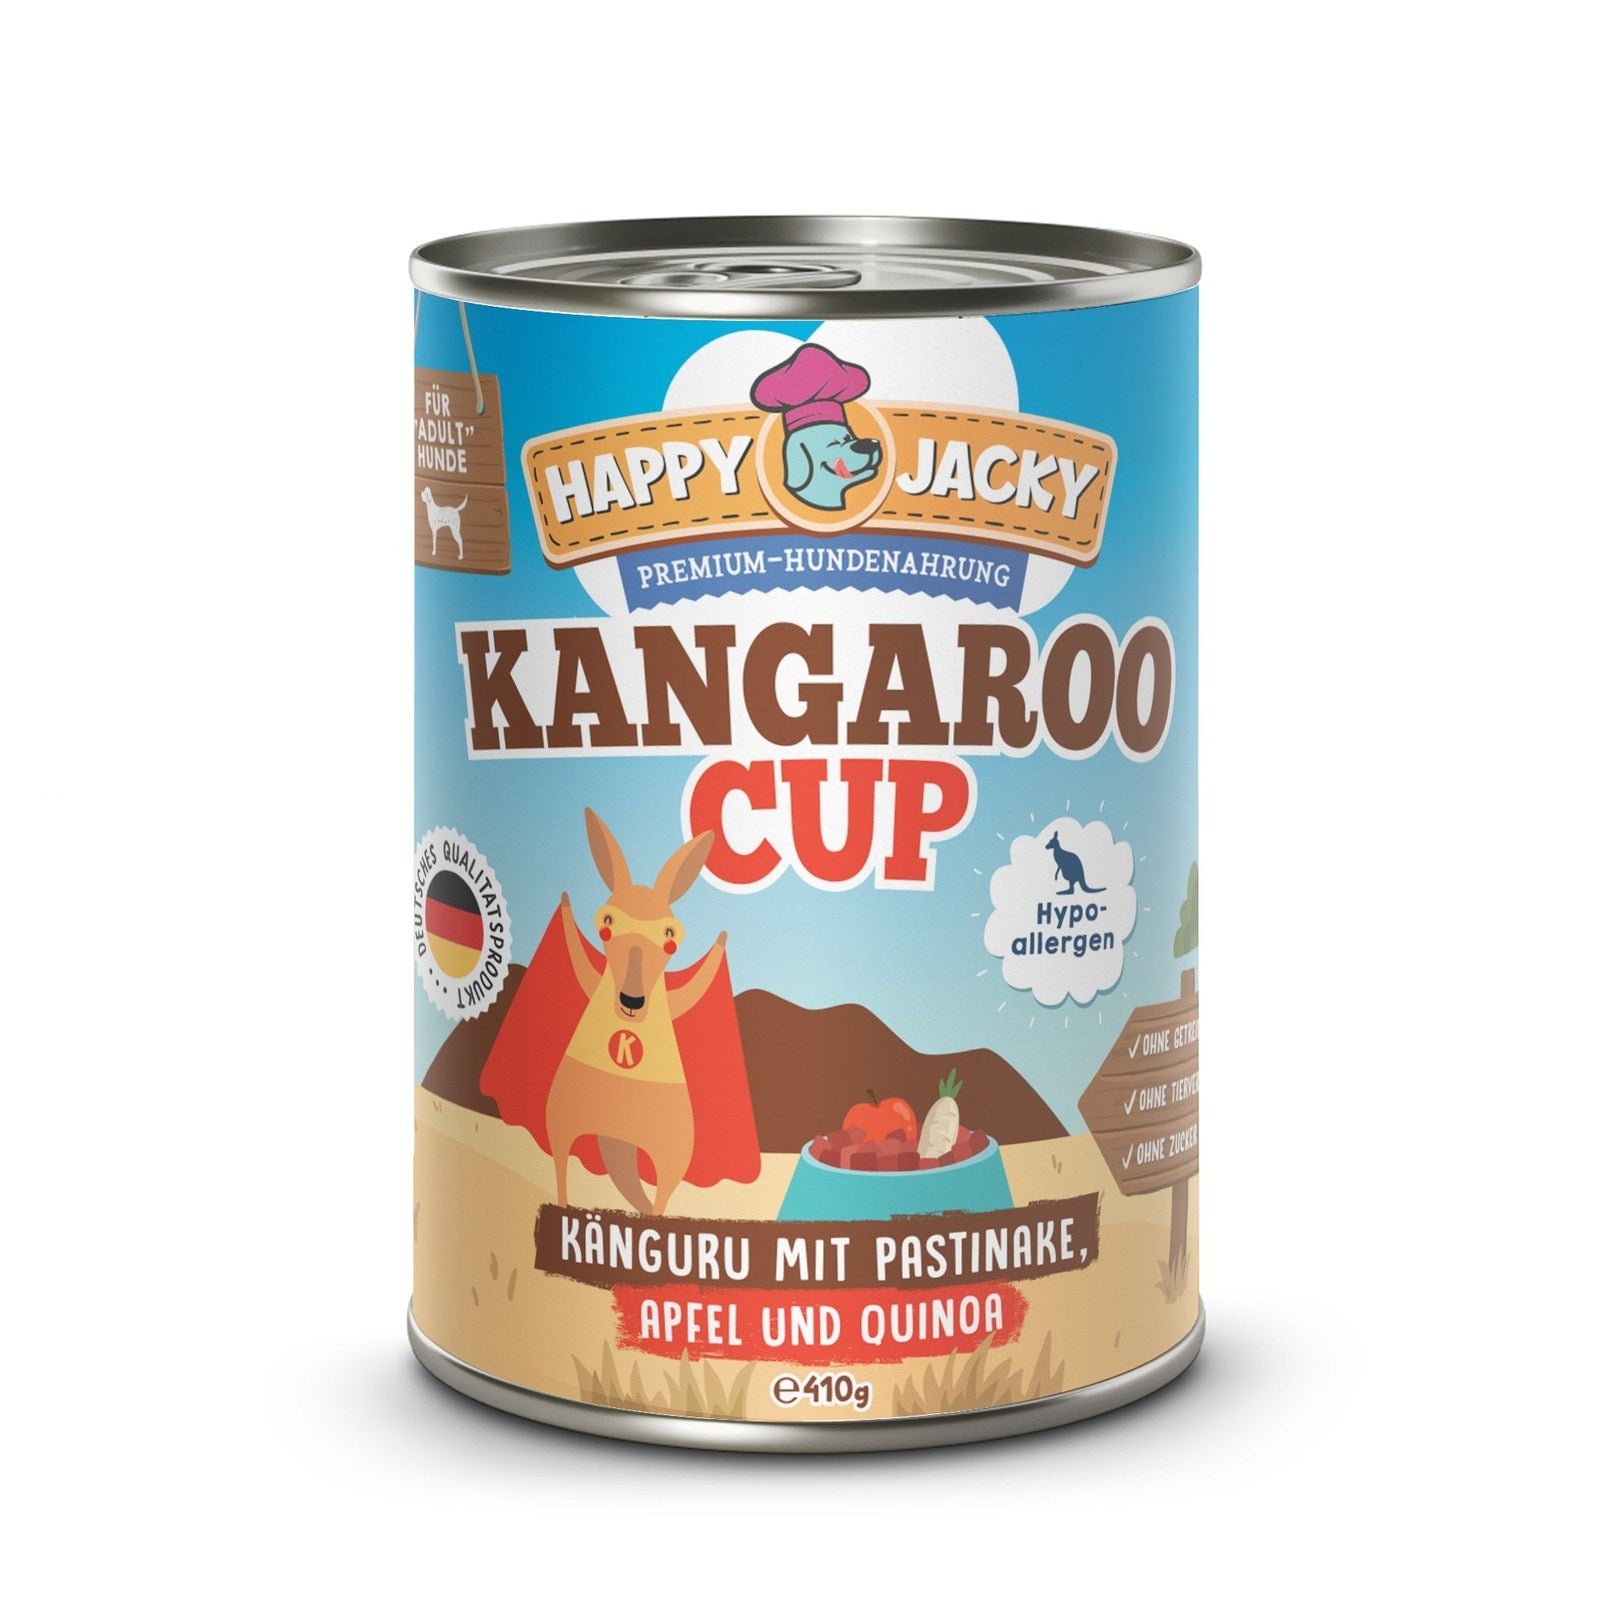 Kangaroo Cup - Känguru mit Pastinake, Apfel & Quinoa HAPPY JACKY